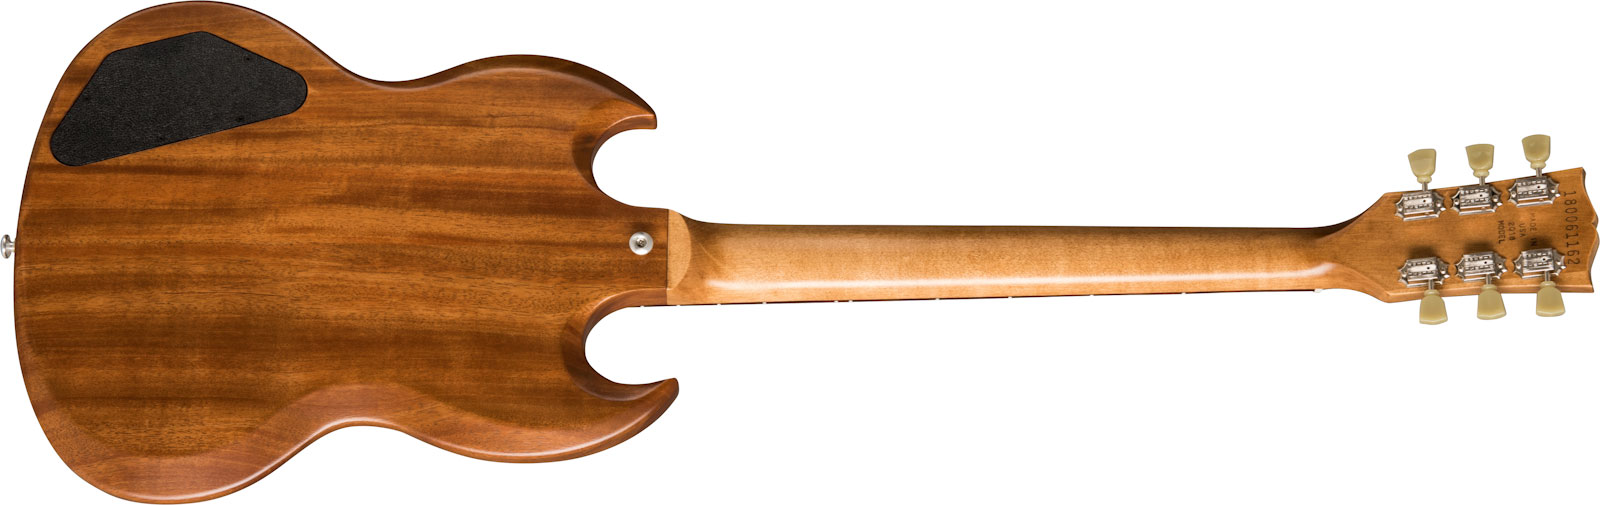 Gibson Sg Tribute Lh Modern Gaucher 2h Ht Rw - Natural Walnut - Left-handed electric guitar - Variation 1